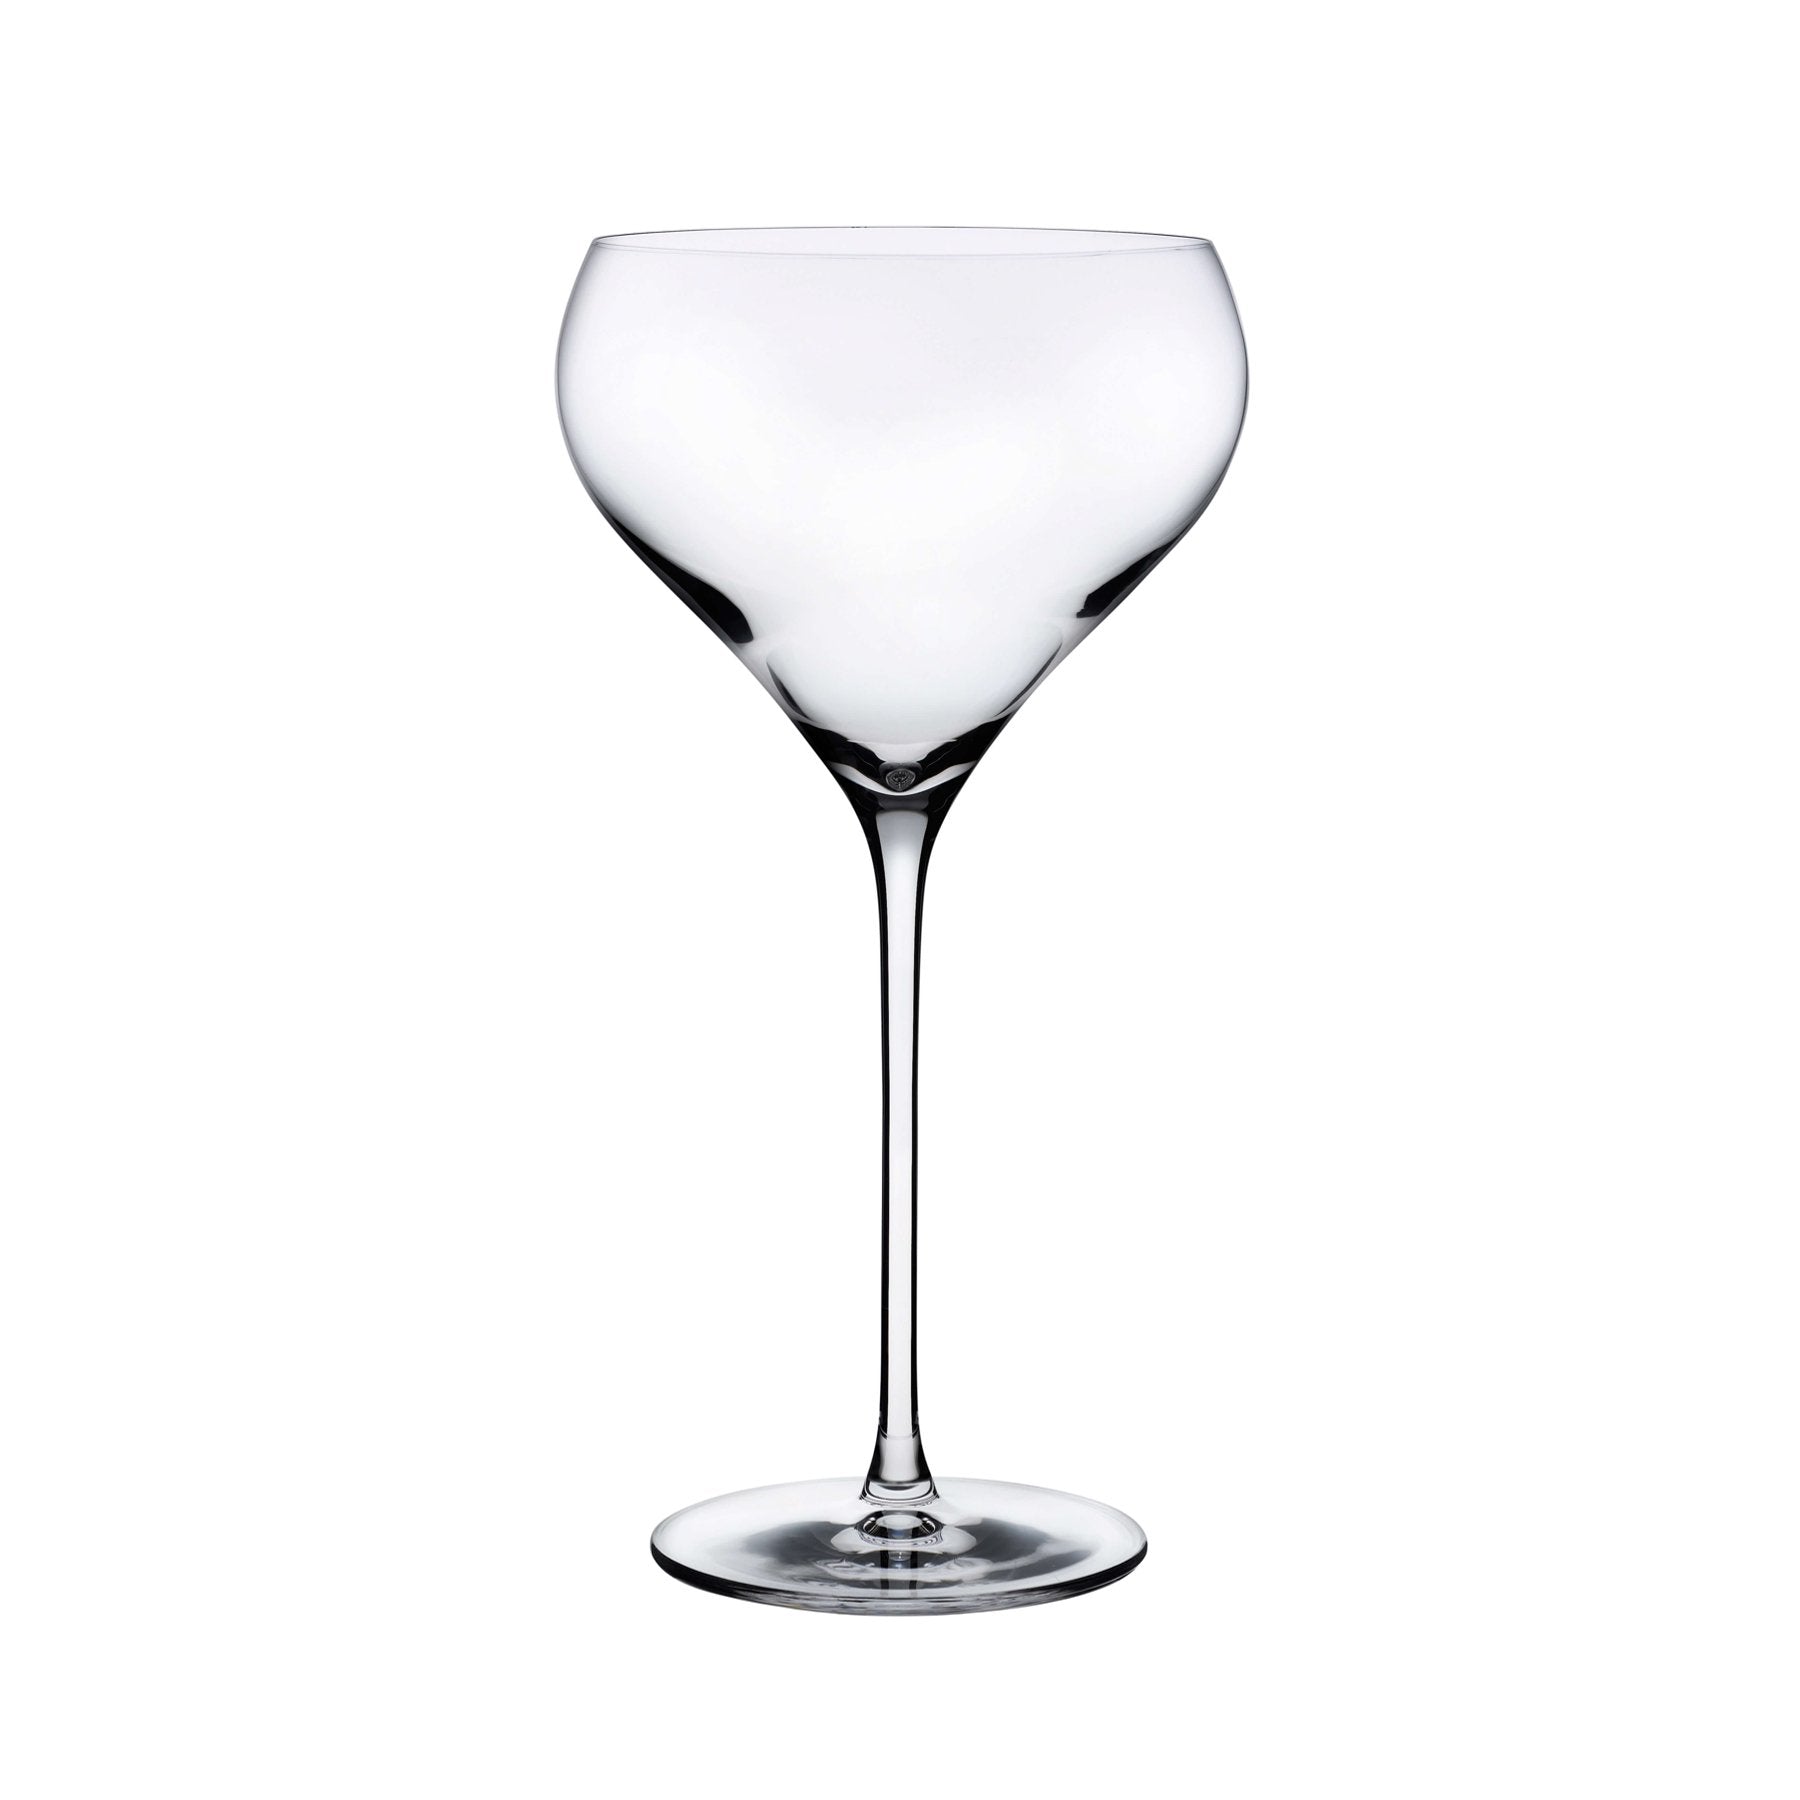 Retro Barware Crystal Martini Glasses Black Stems Set of 2 